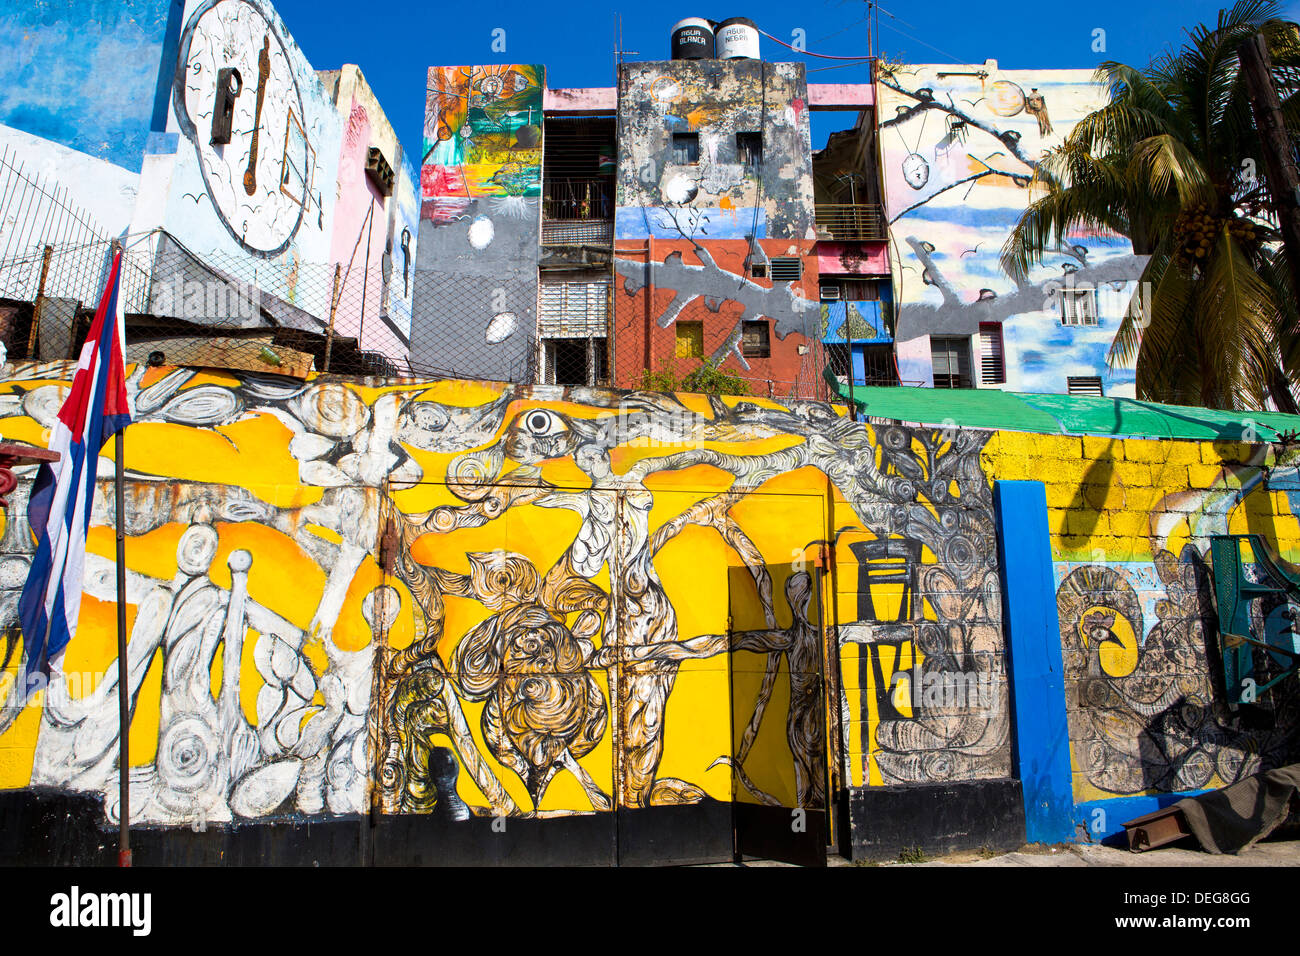 Walls painted with Afro-Caribbean art, Callejon de Hamel, a neighborhood in Havana, Cuba, West Indies, Central America Stock Photo